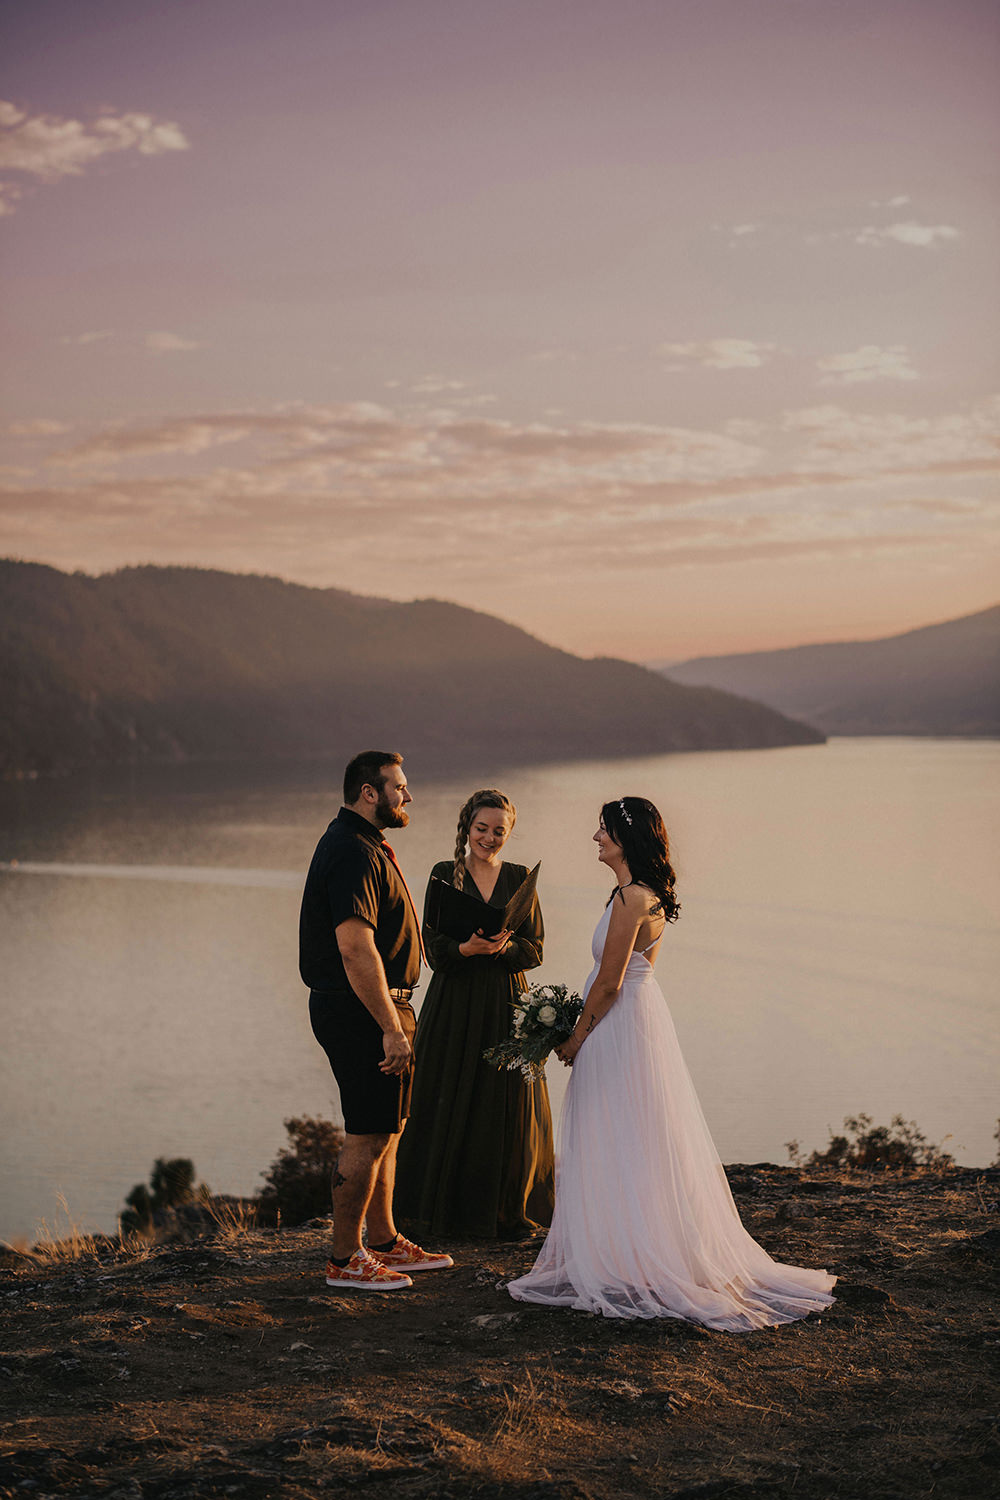 Kelowna Wedding Photography during sunset overlooking Kalamalka lake